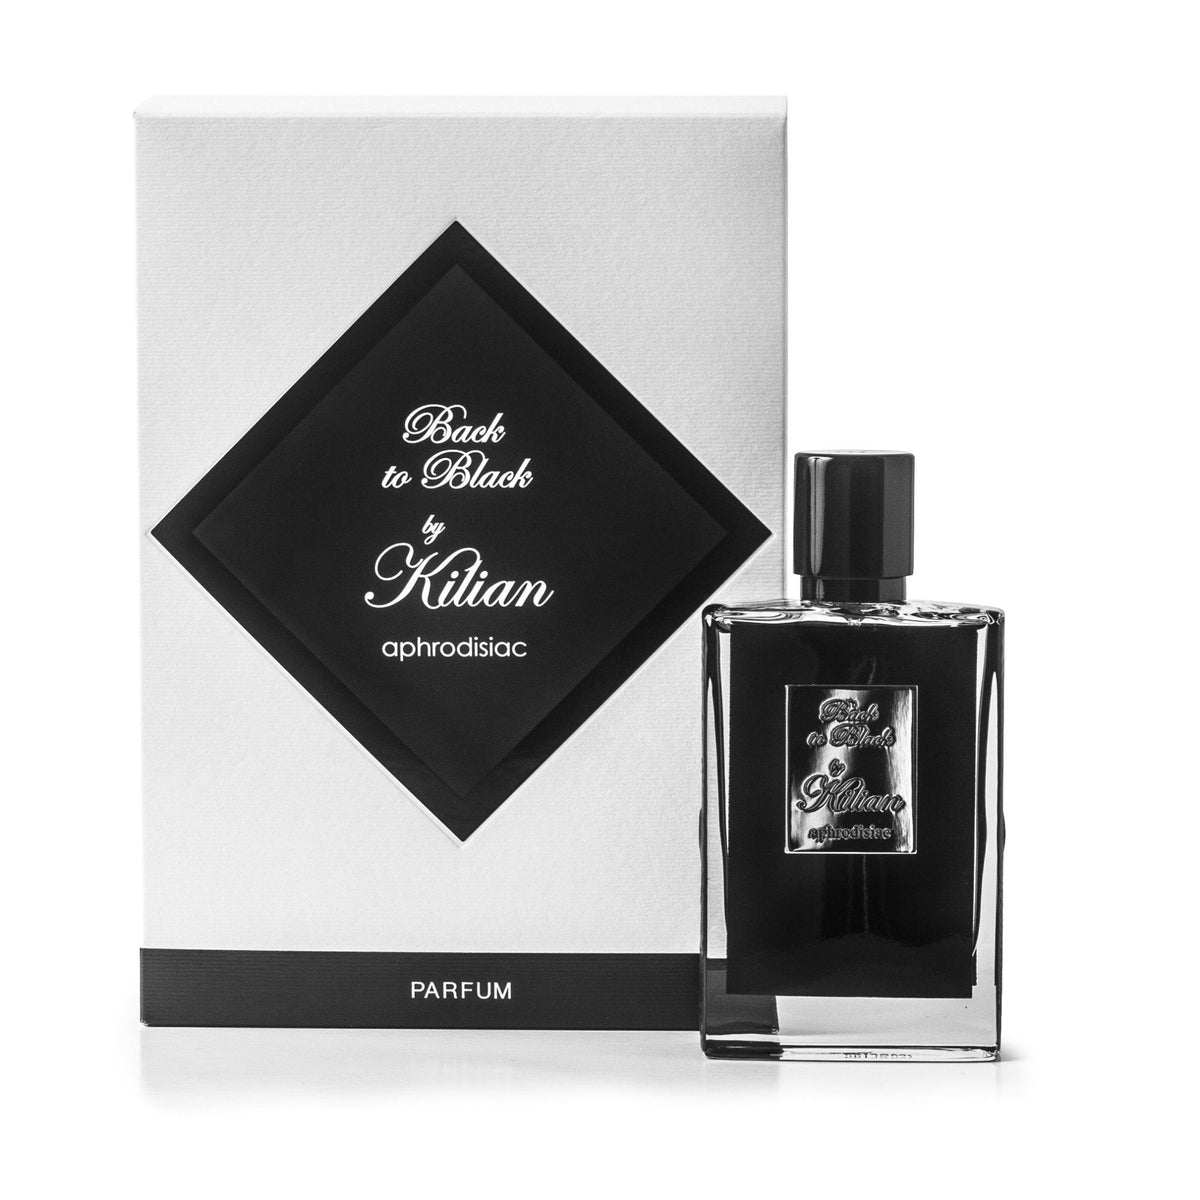 Back to Black Aphrodisiac Eau de Parfum Spray Unisex by Kilian